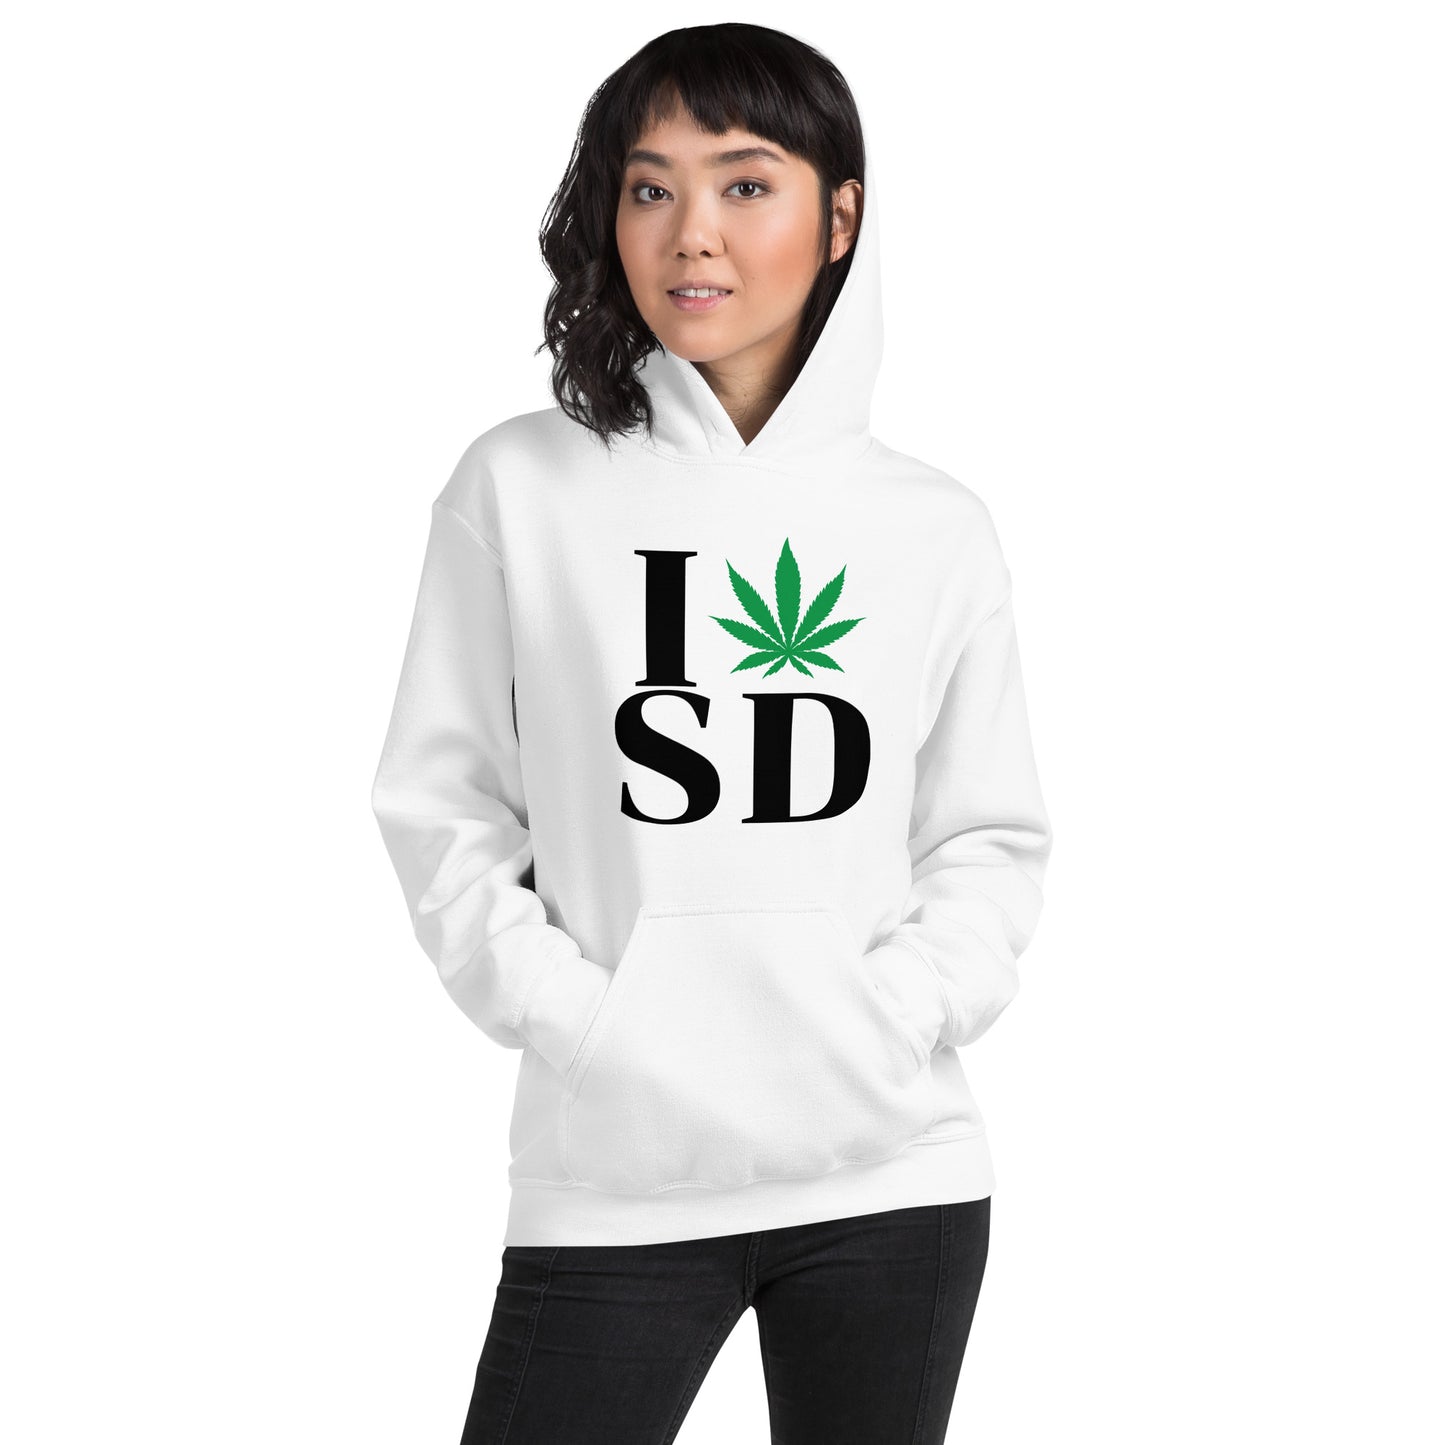 South Dakota I Leaf SD San Diego City Unisex Hoodie USA Cannabis Marijuana Pot Weed Advocacy